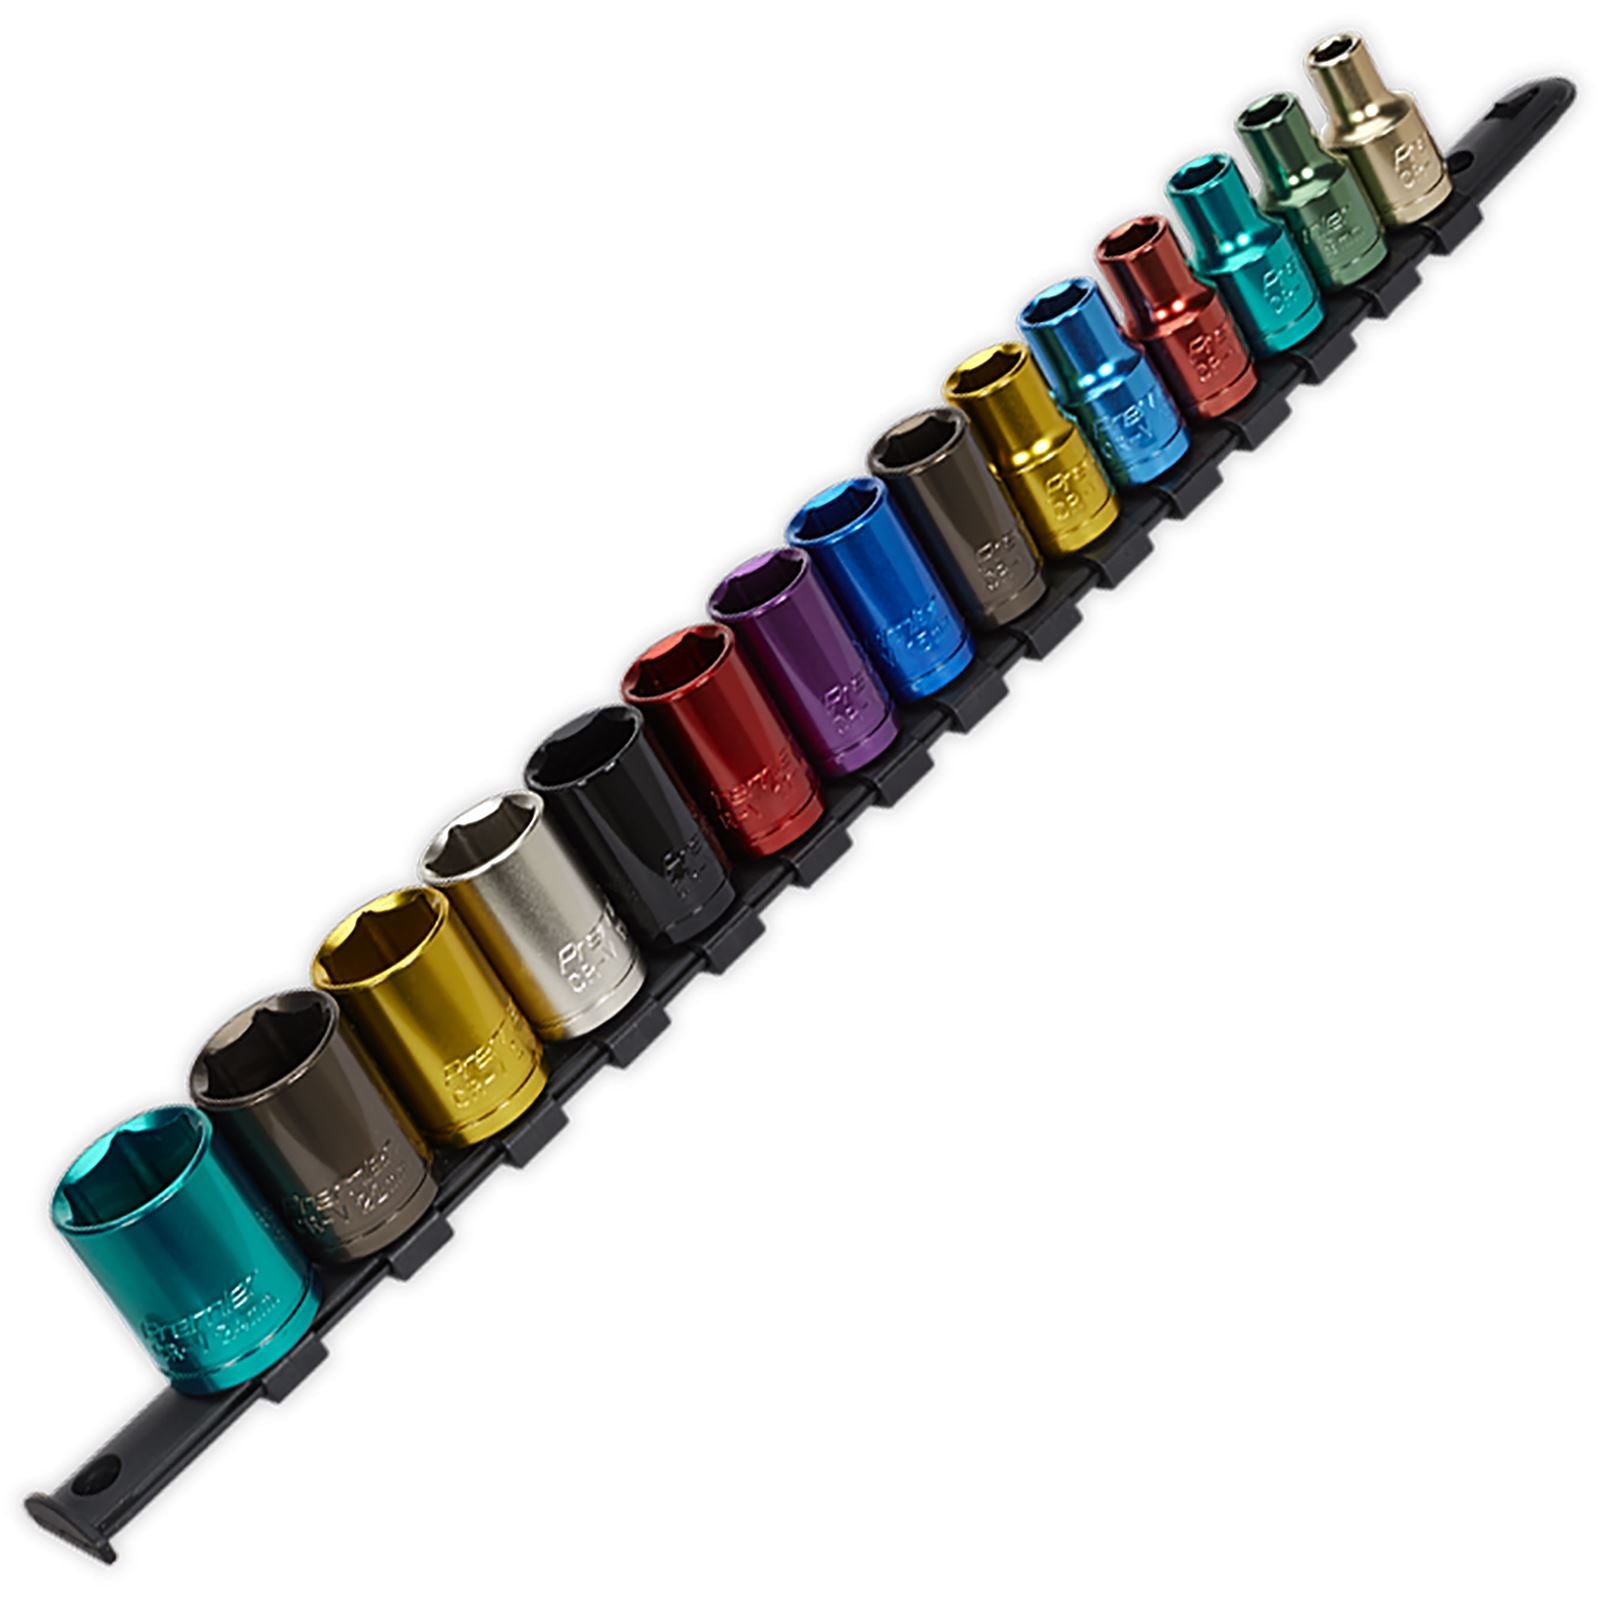 Sealey Premier 15 Piece 1/2" Drive Multi Coloured Socket Set 8-24mm